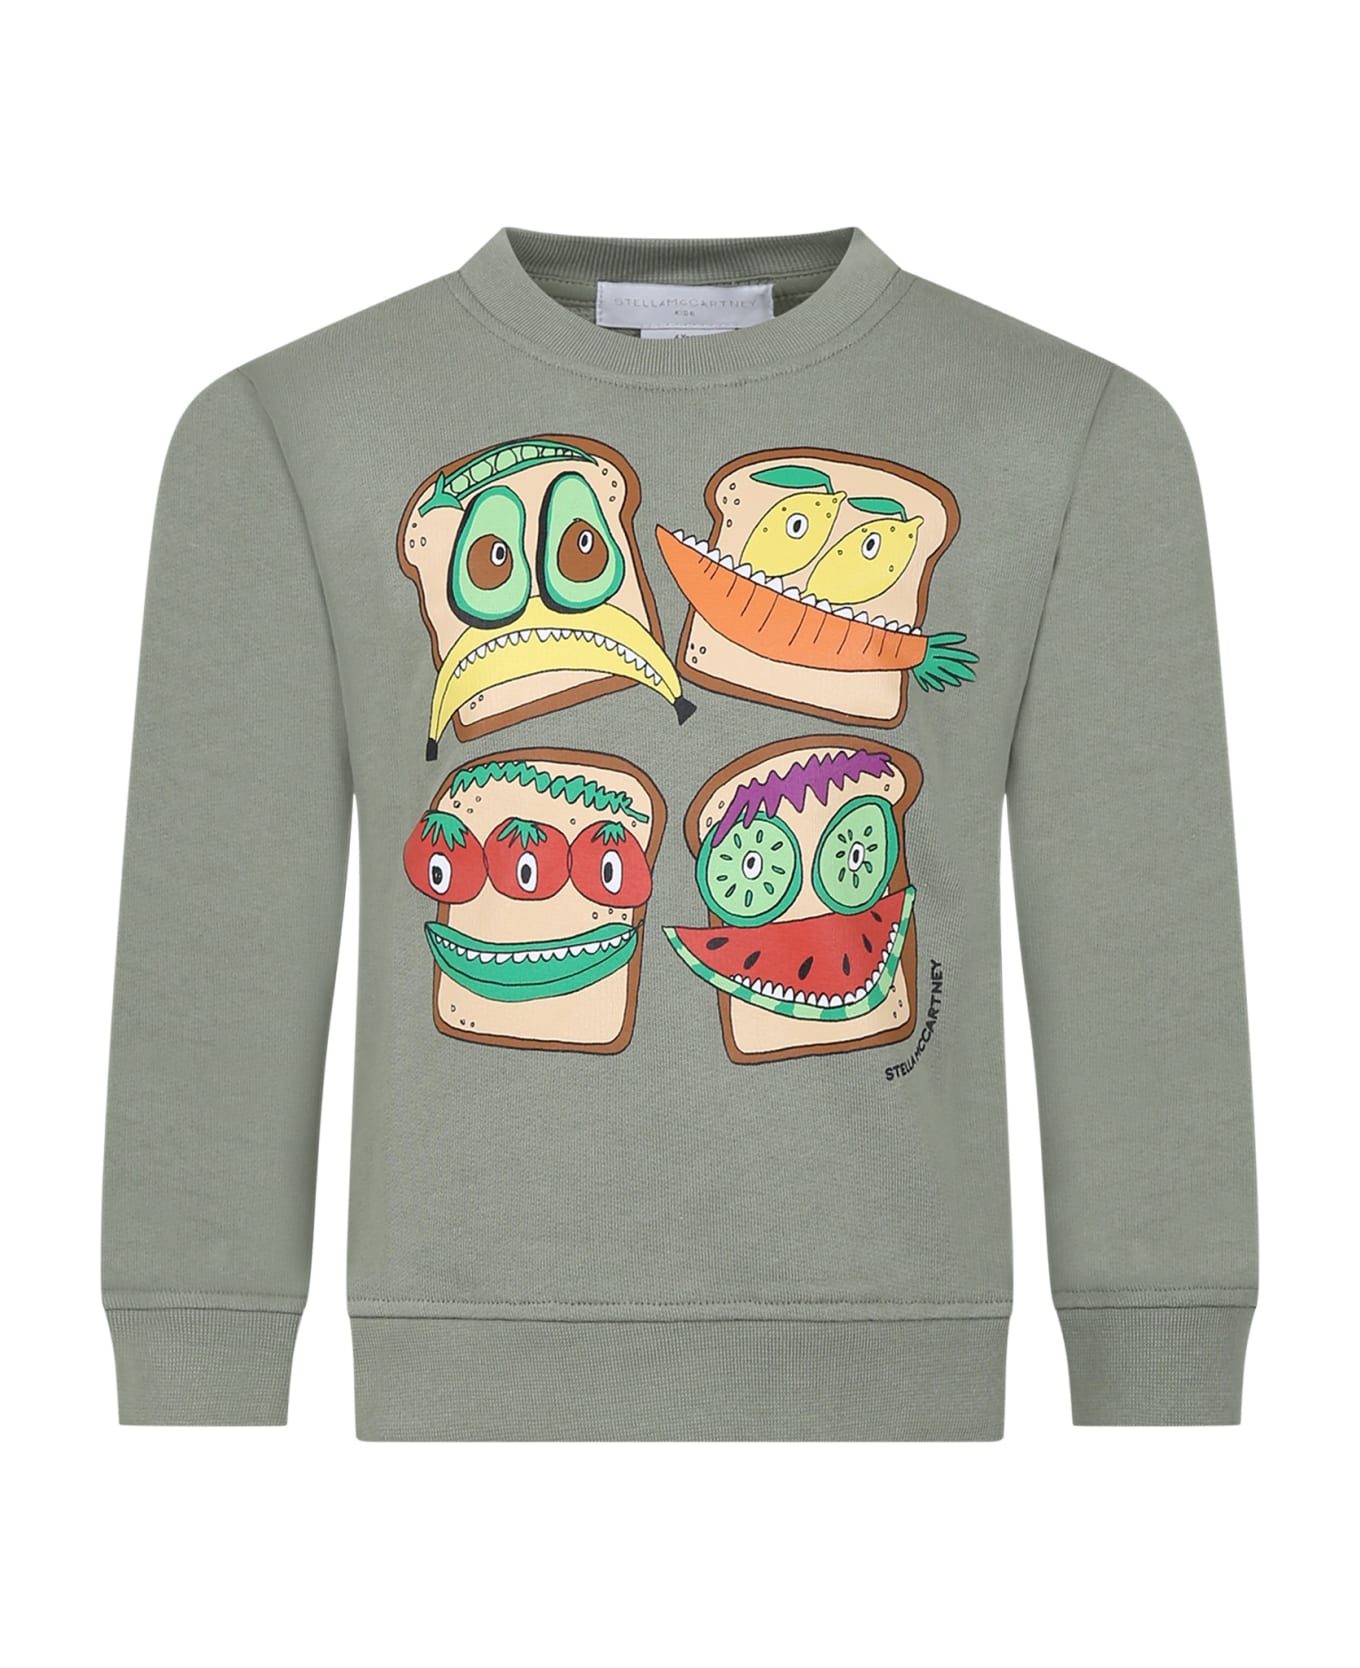 Stella McCartney Kids Green Sweatshirt For Boy With Toast Print - Green